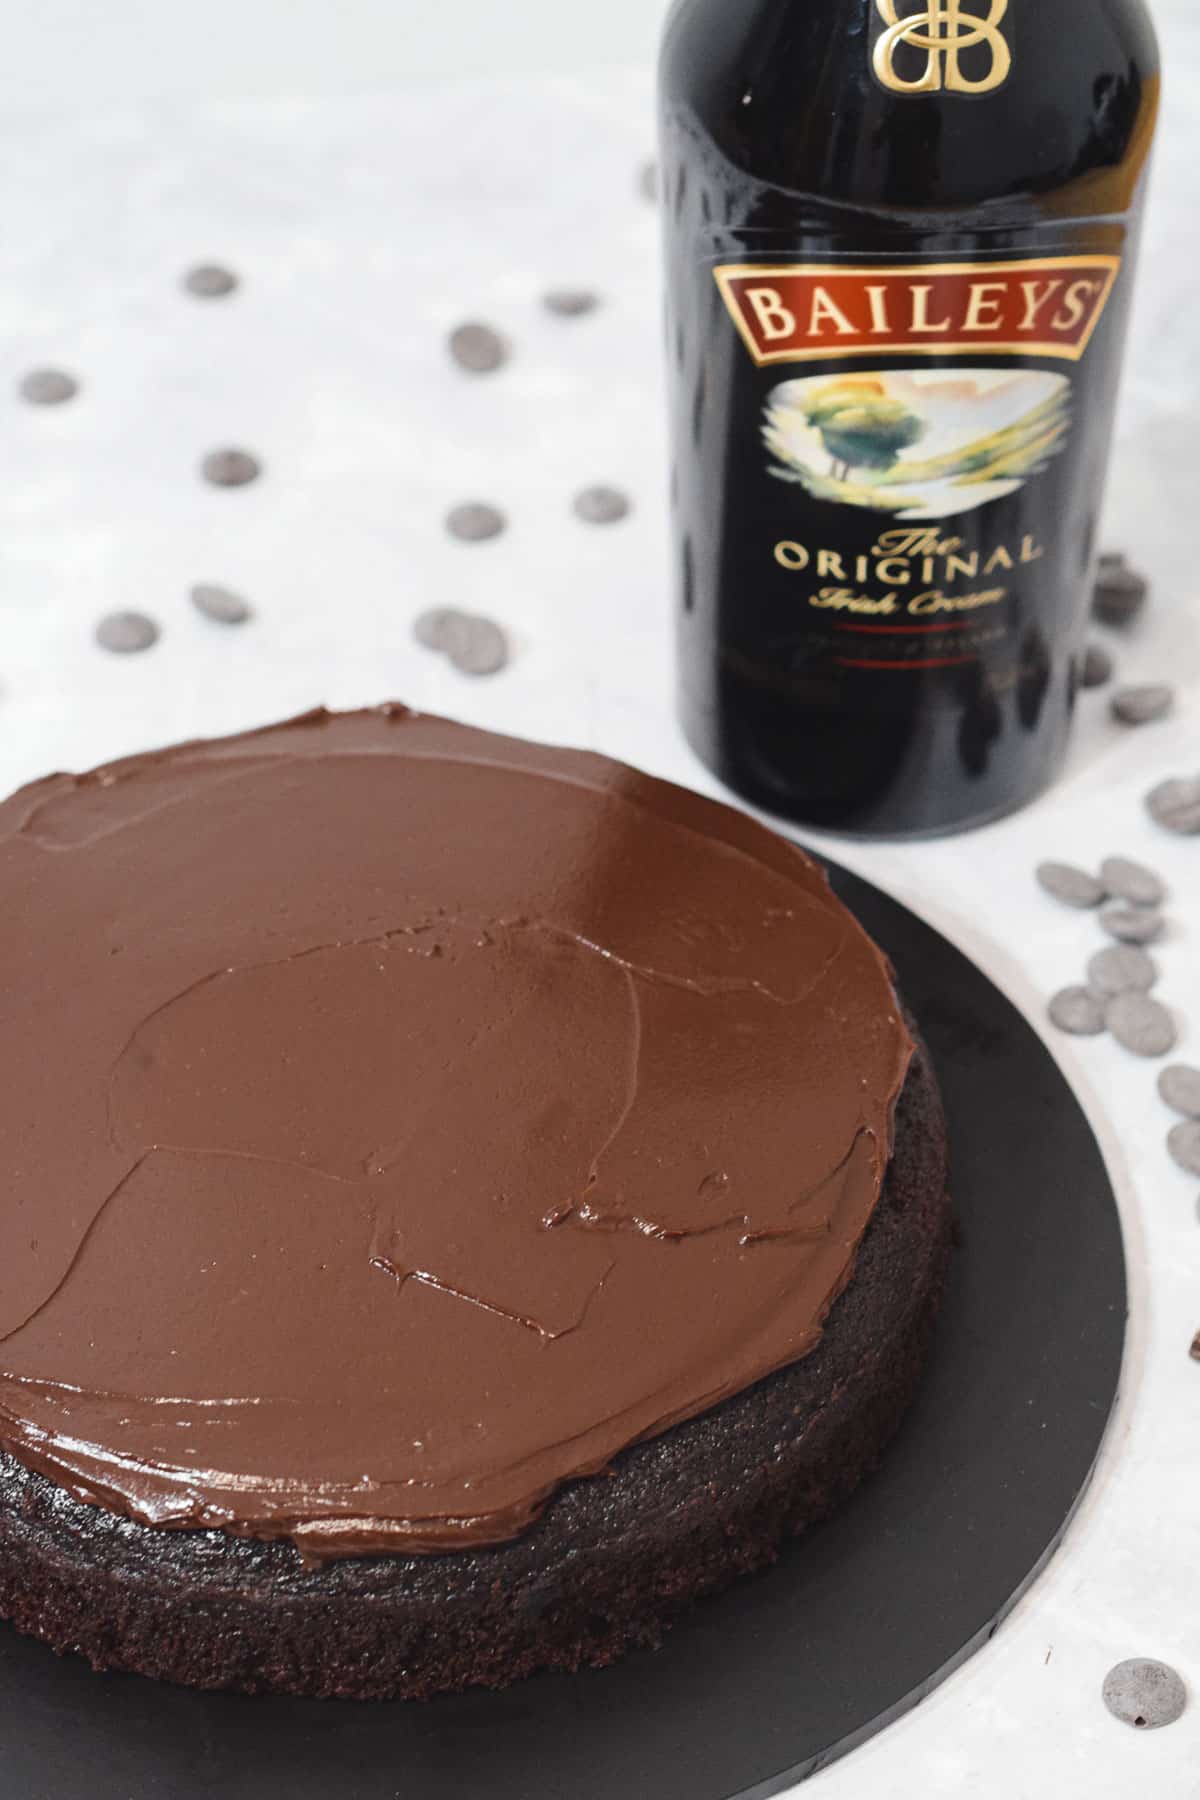 baileys ganache frosting on a chocolate cake.